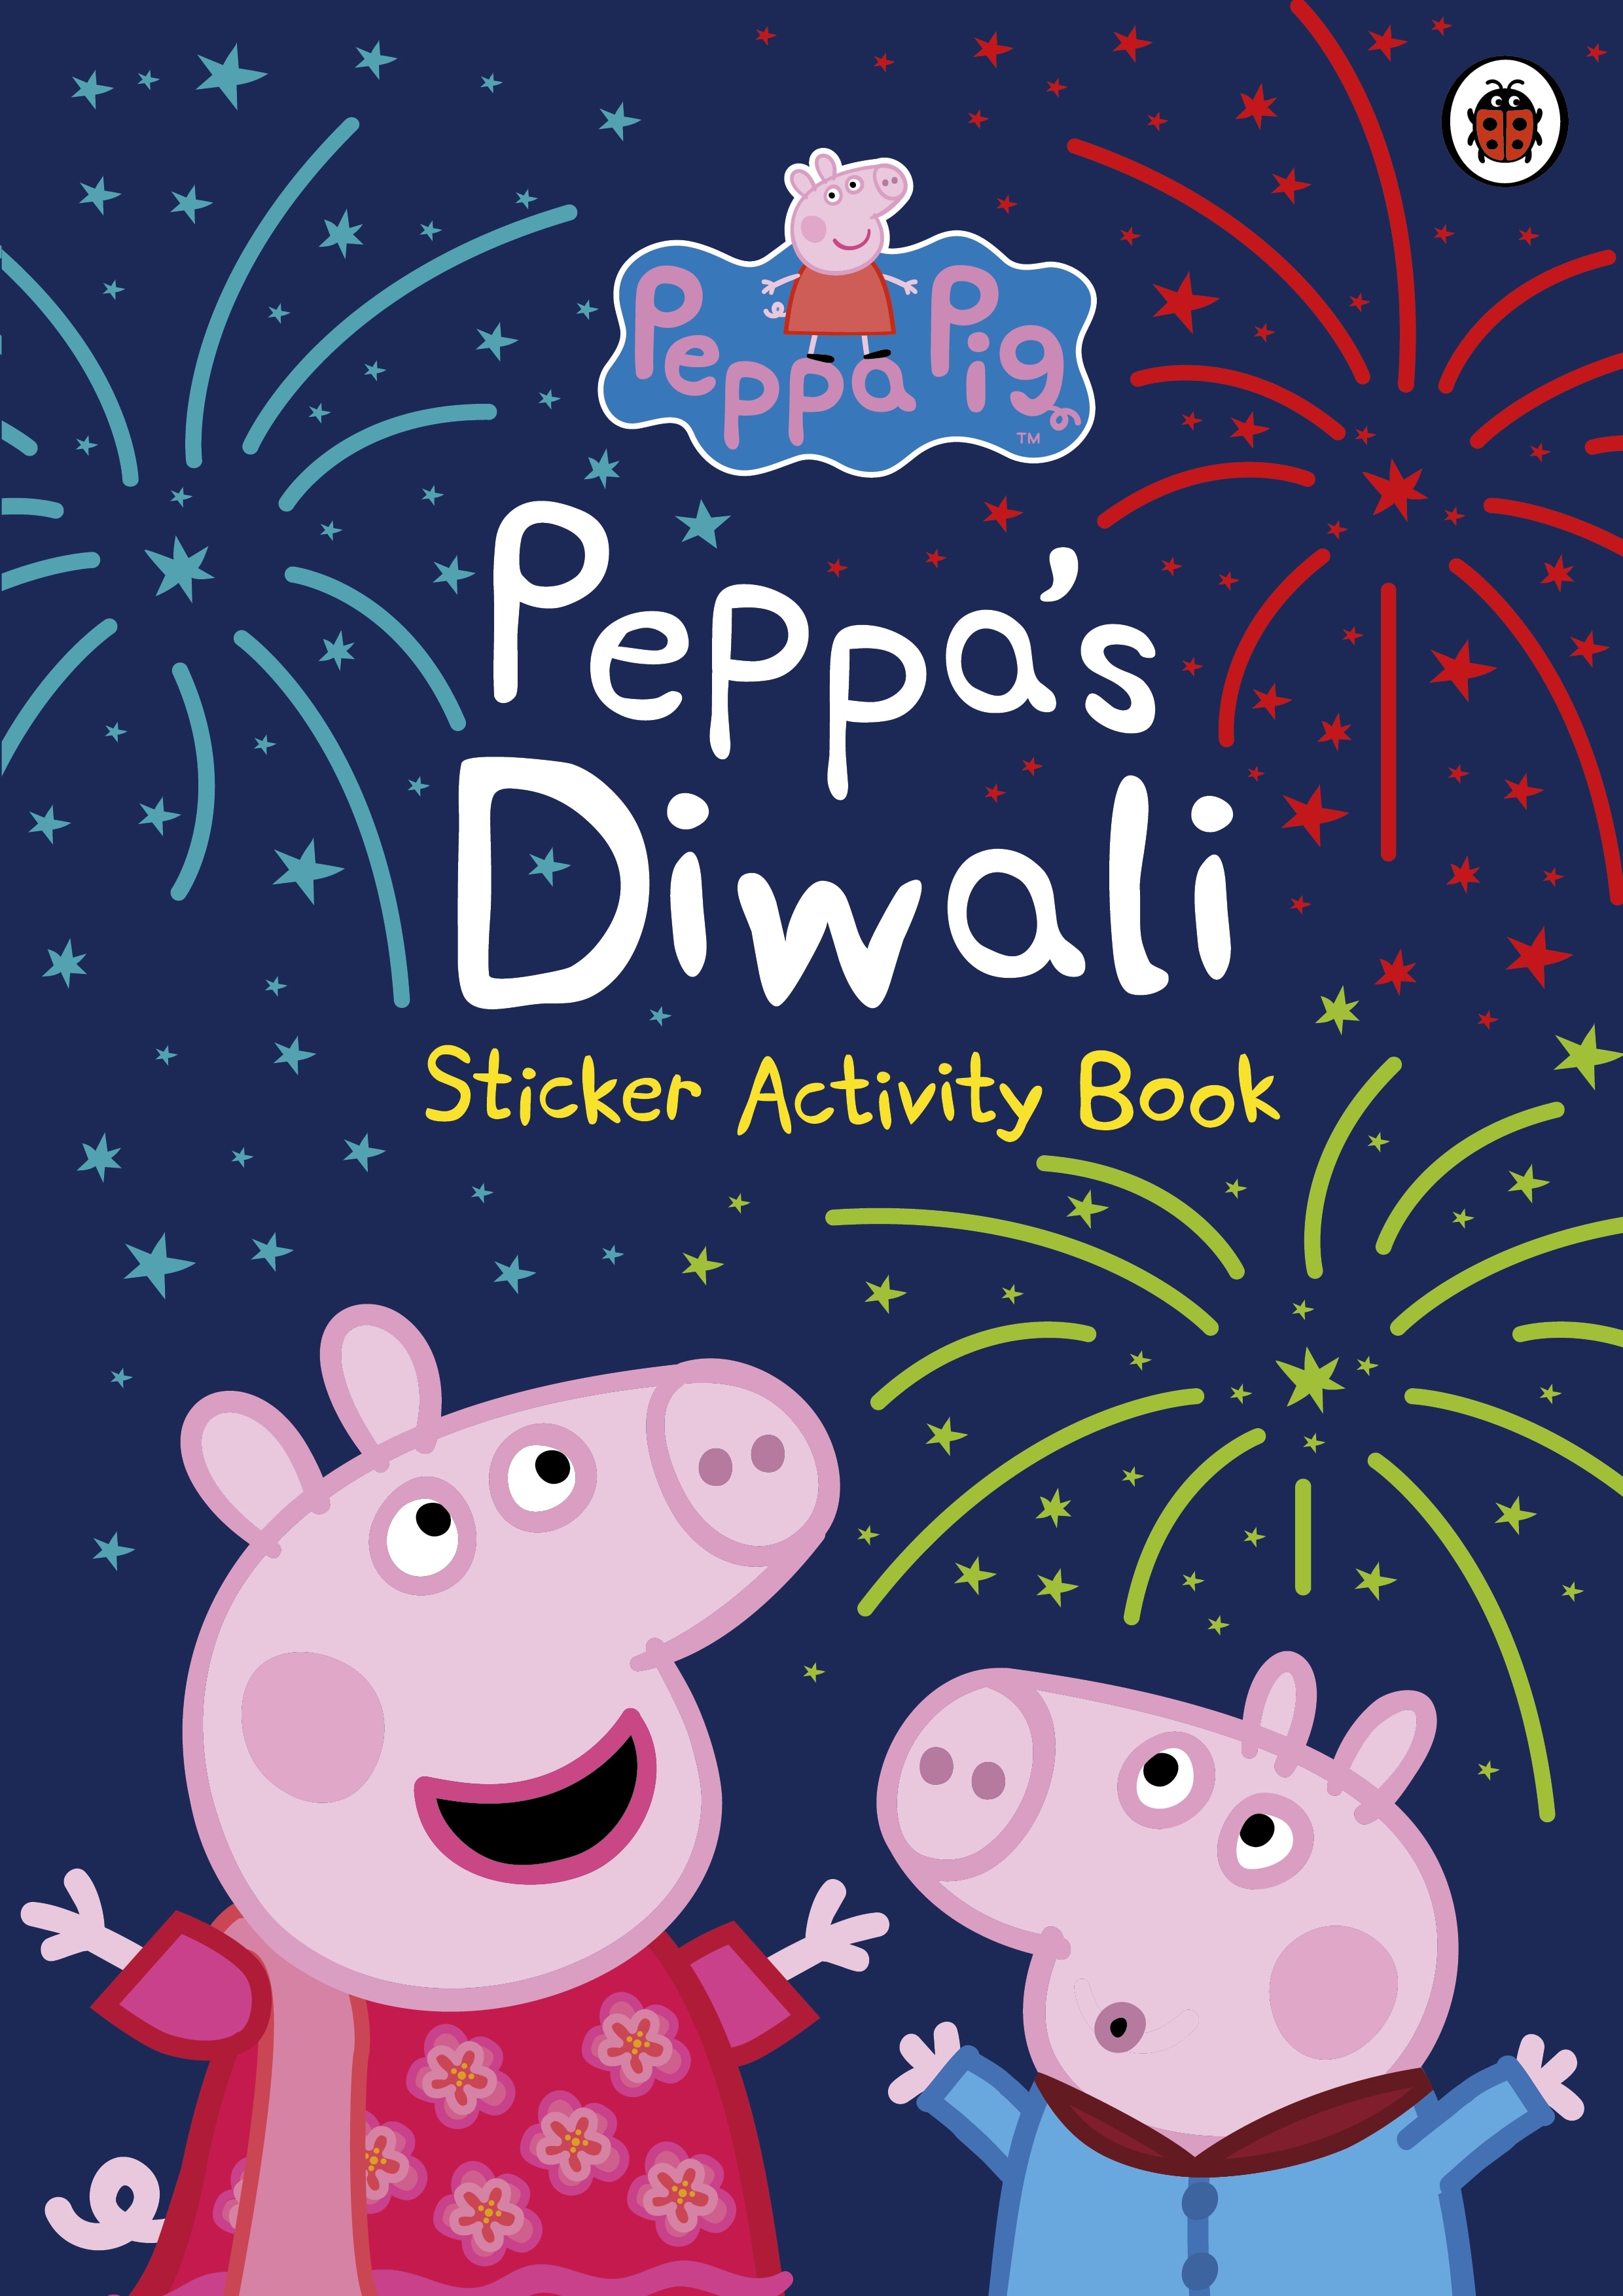 Book “Peppa Pig: Peppa's Diwali Sticker Activity Book” by Peppa Pig — September 3, 2020